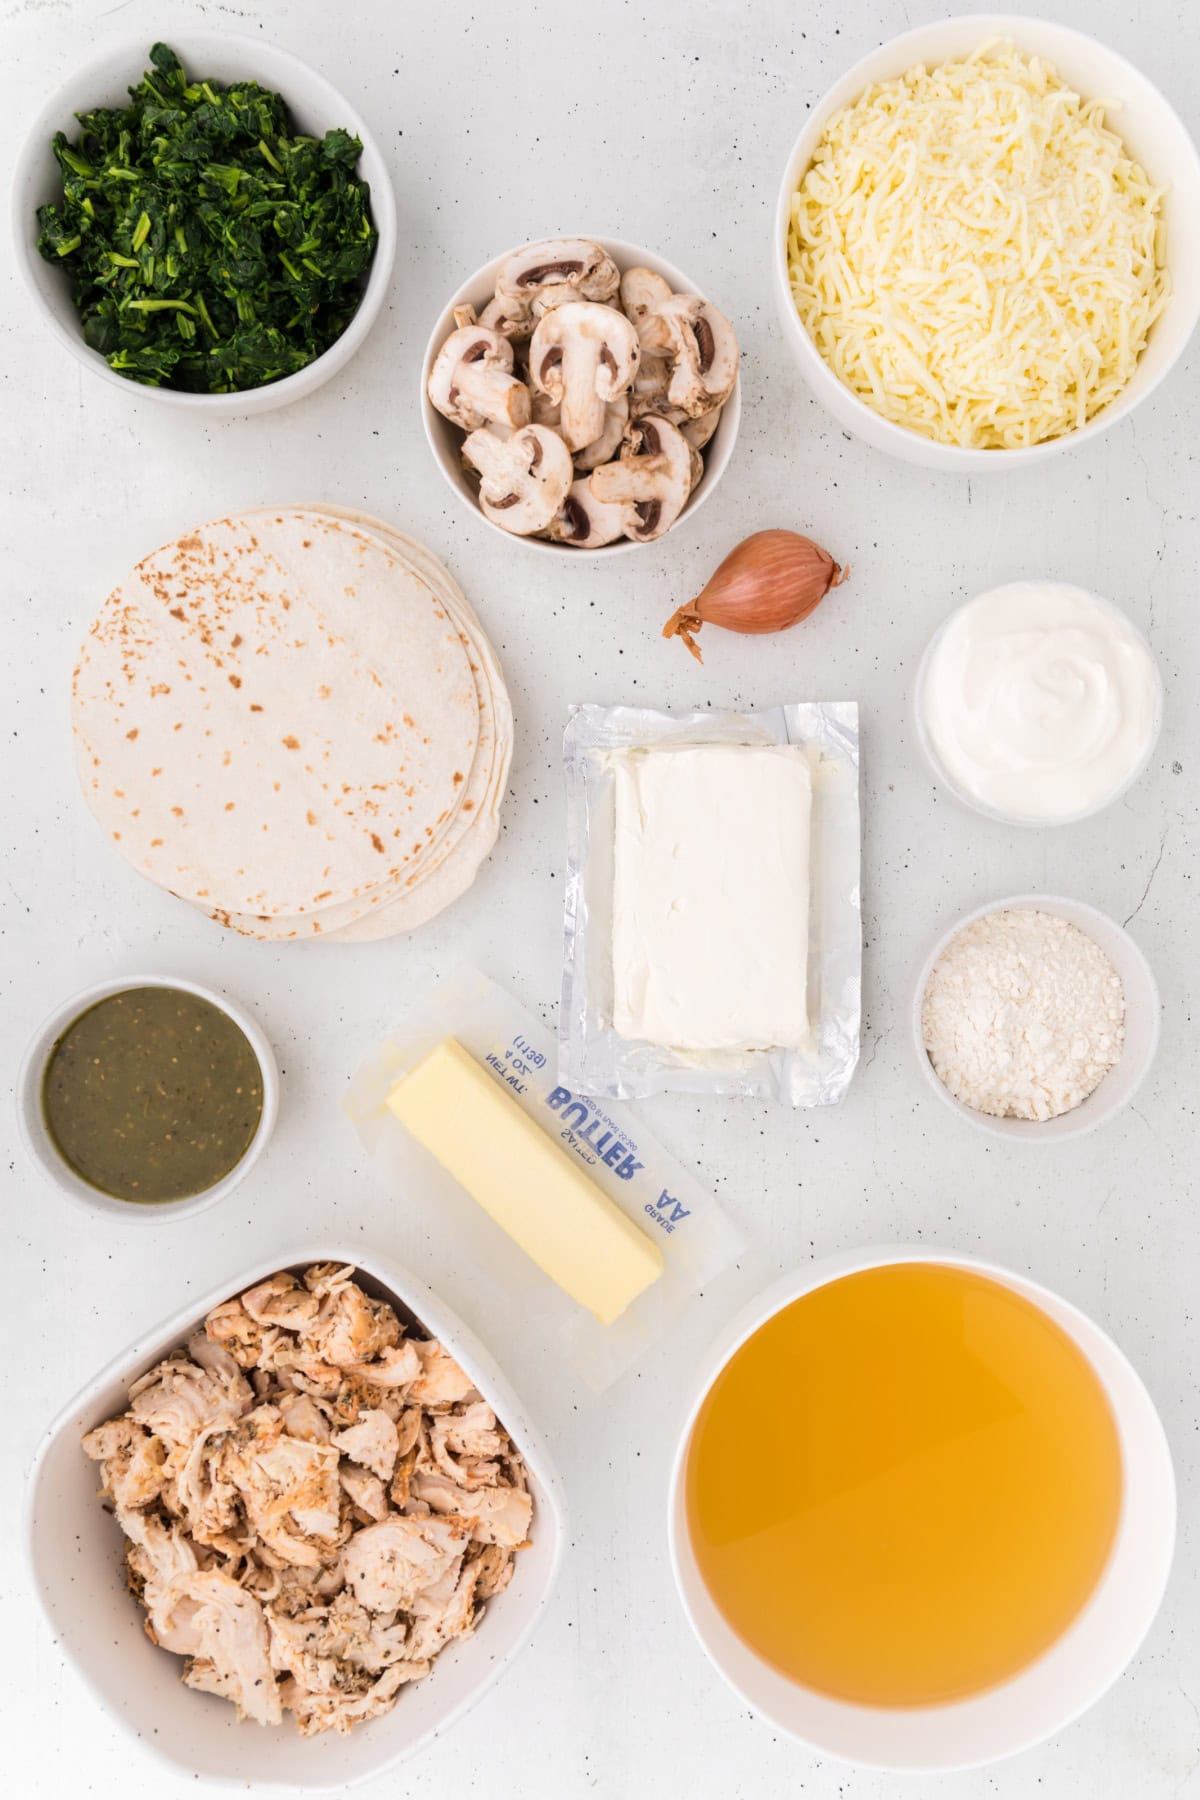 ingredients displayed for making creamy chicken spinach and mushroom enchiladas